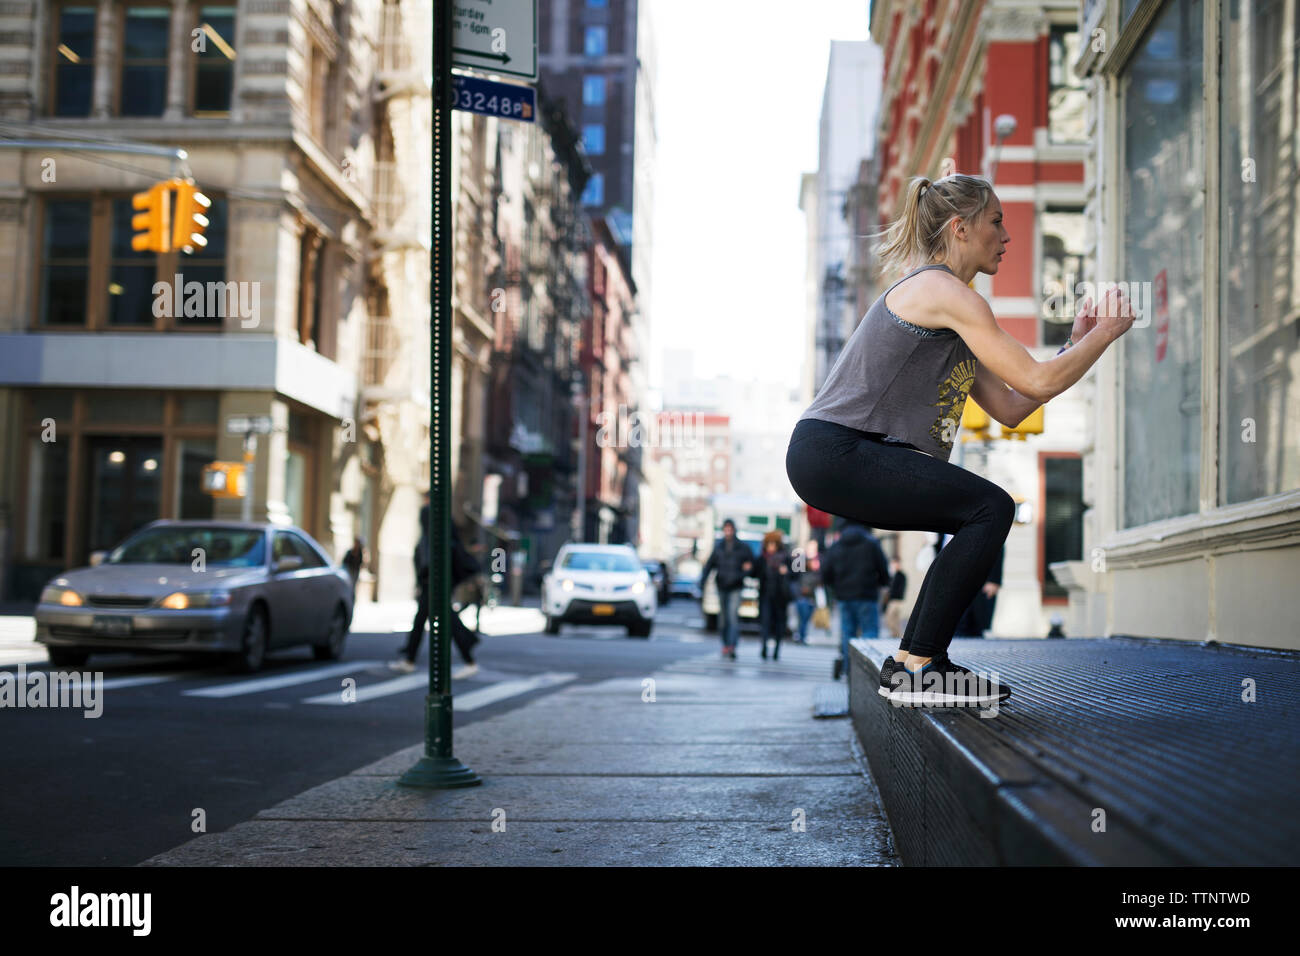 Athlete exercising at sidewalk in city Stock Photo